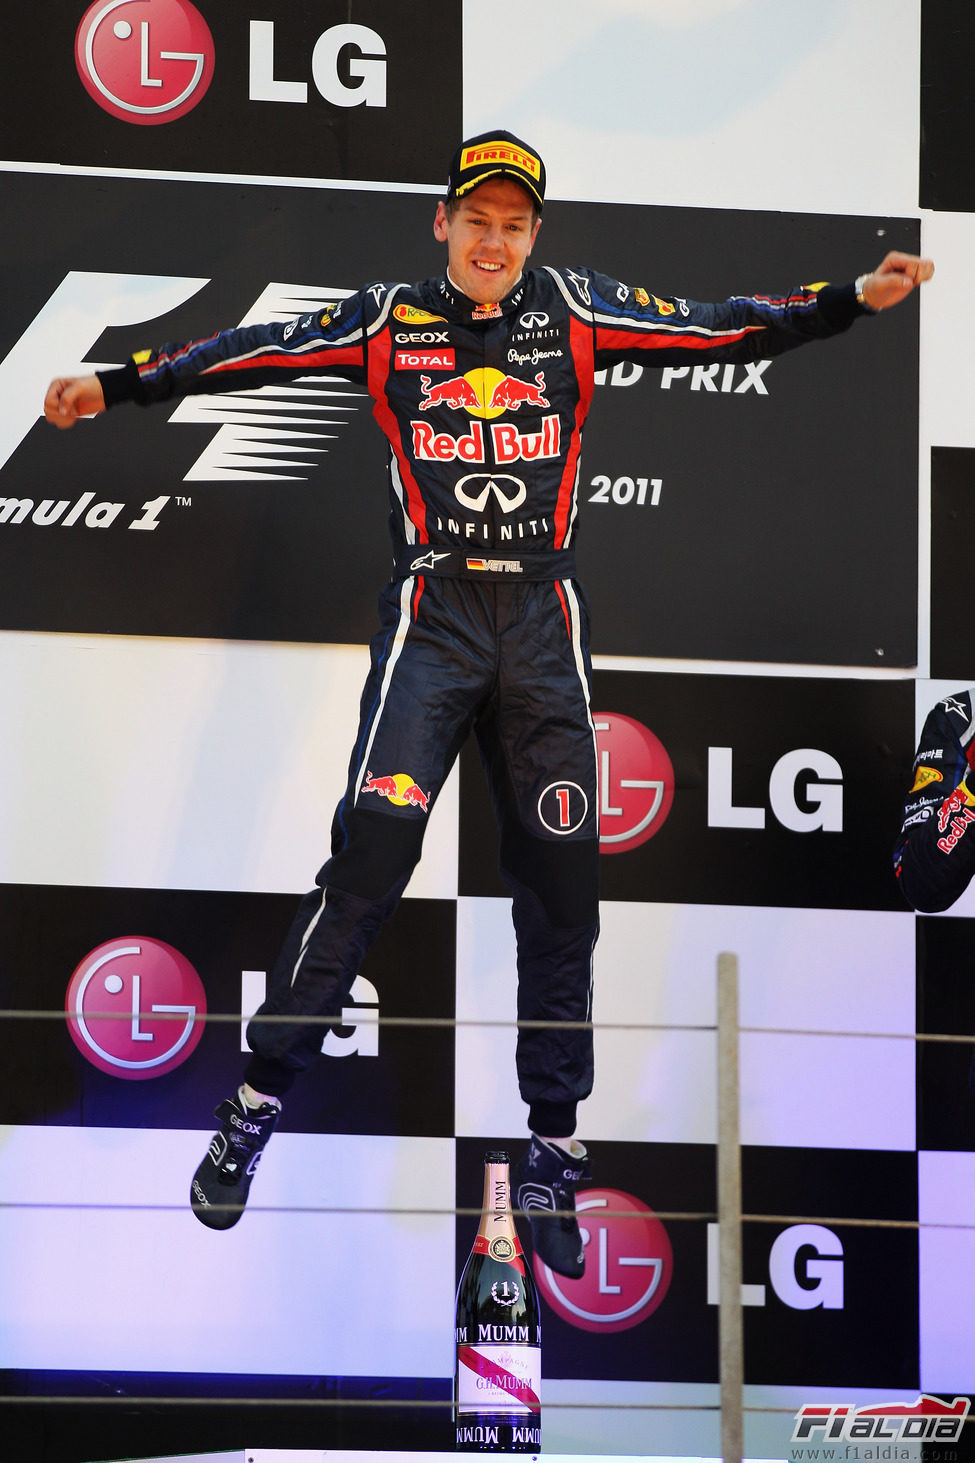 Sebastian Vettel "vuela" en el podio del GP de Corea 2011